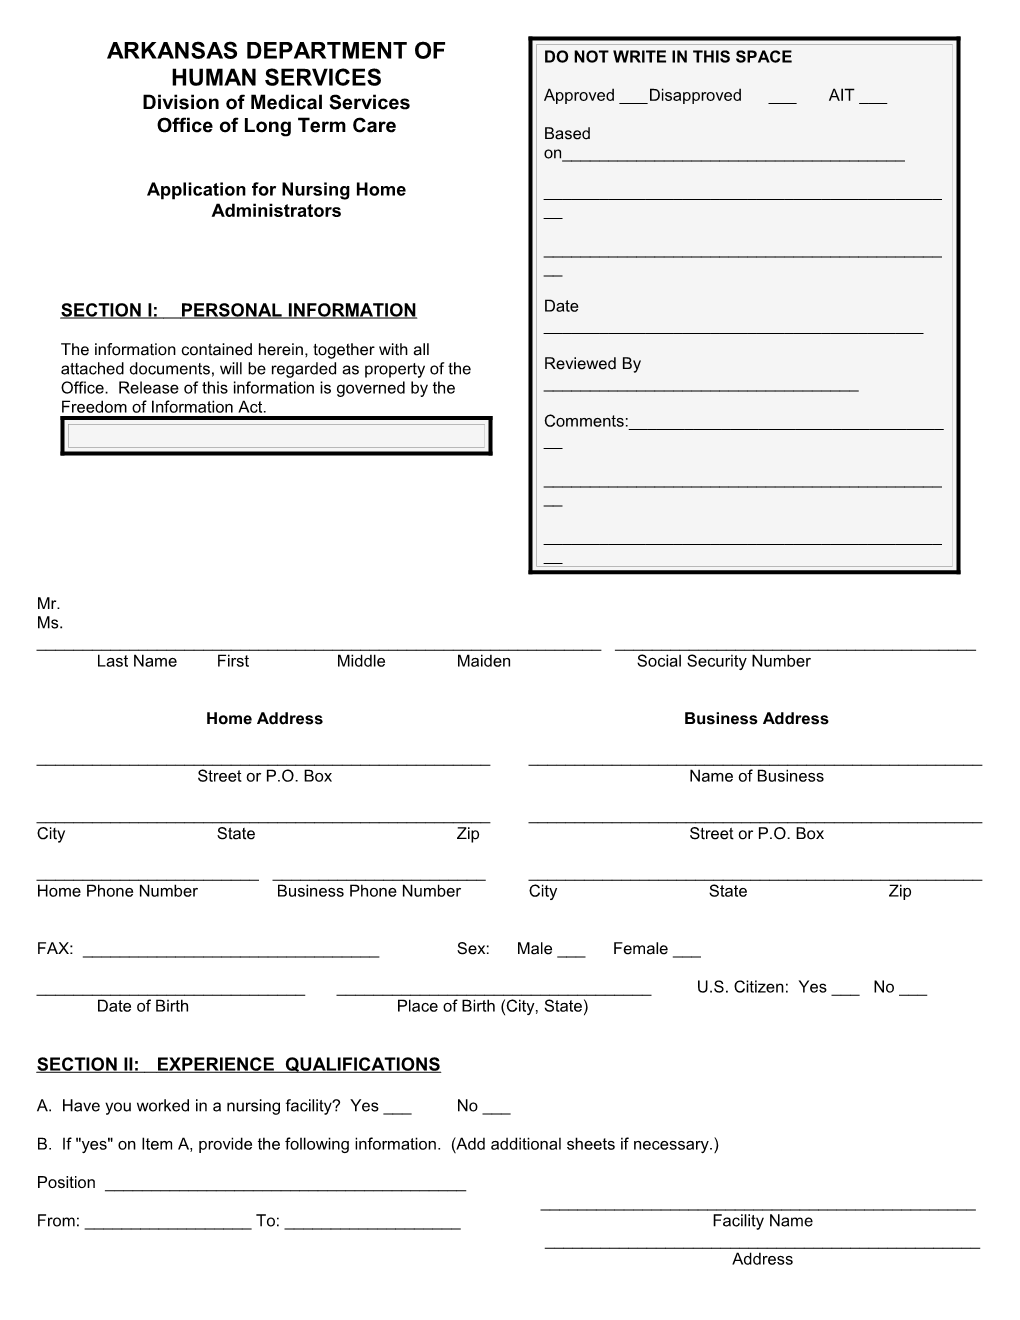 Nursing Home Administrators Application for Nursing Home Administrators